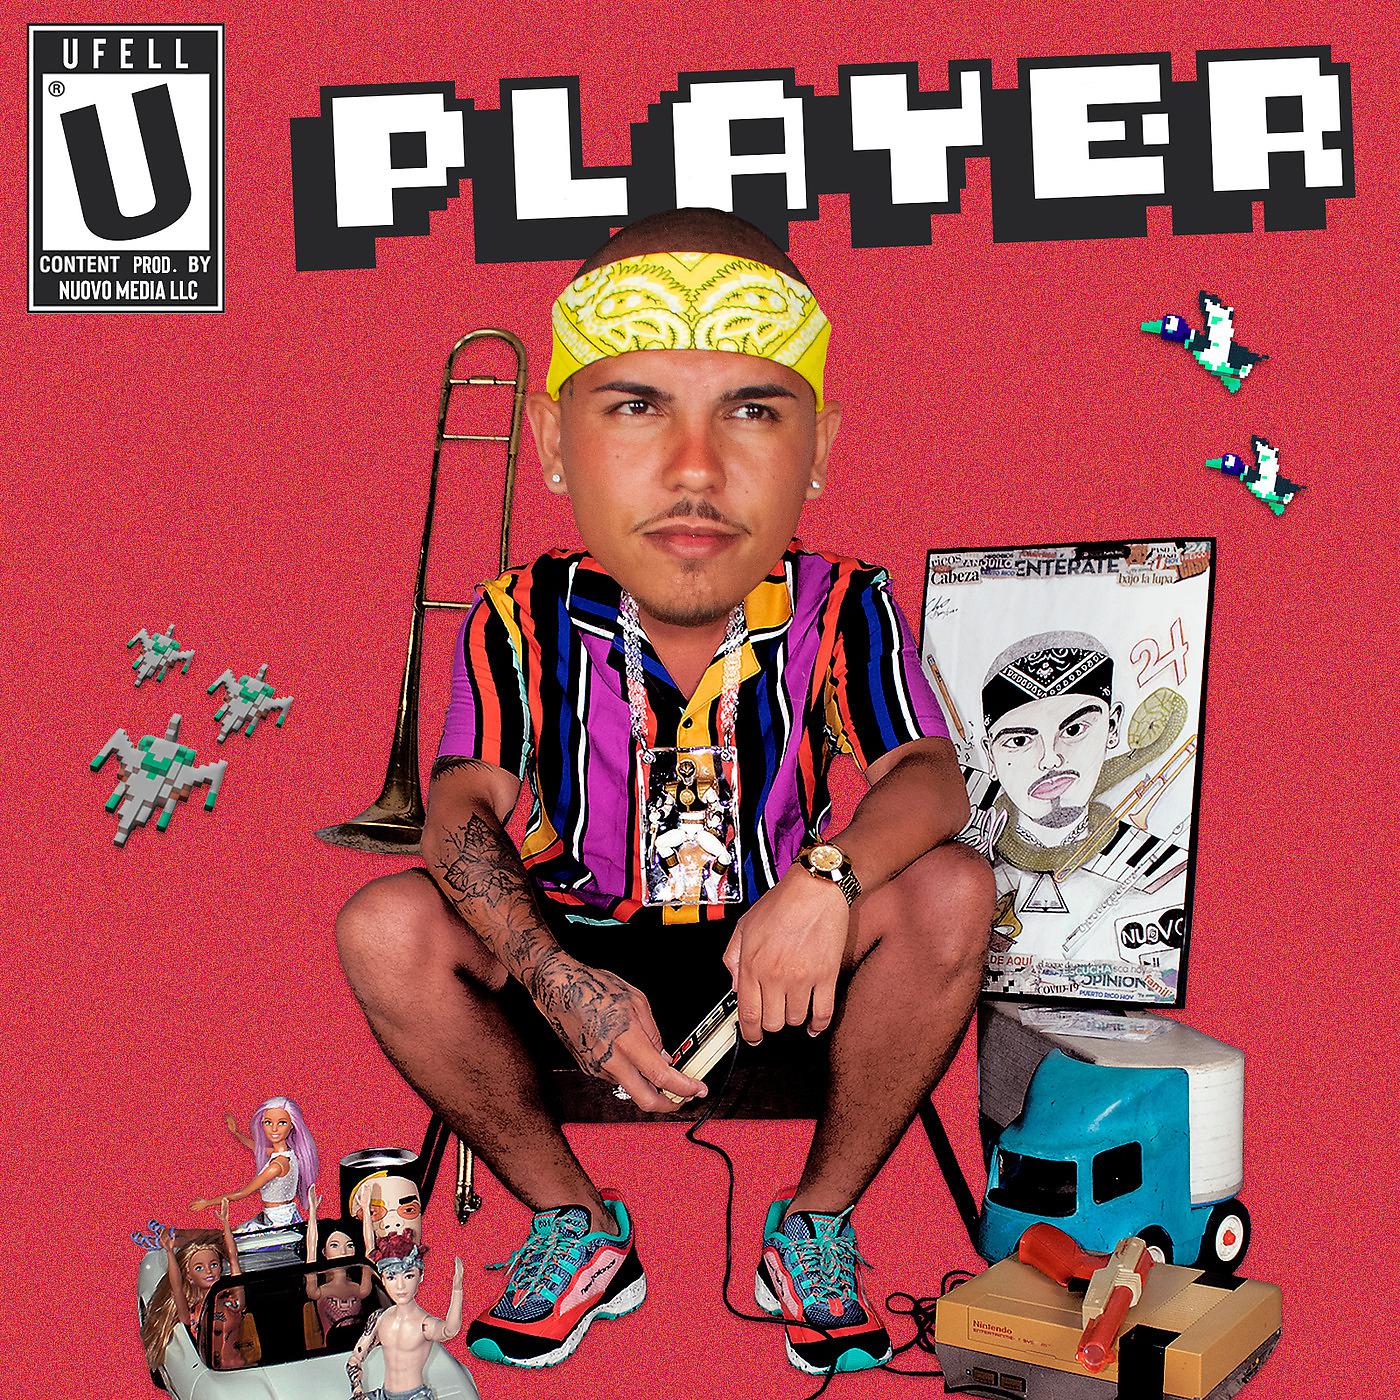 Постер альбома Player